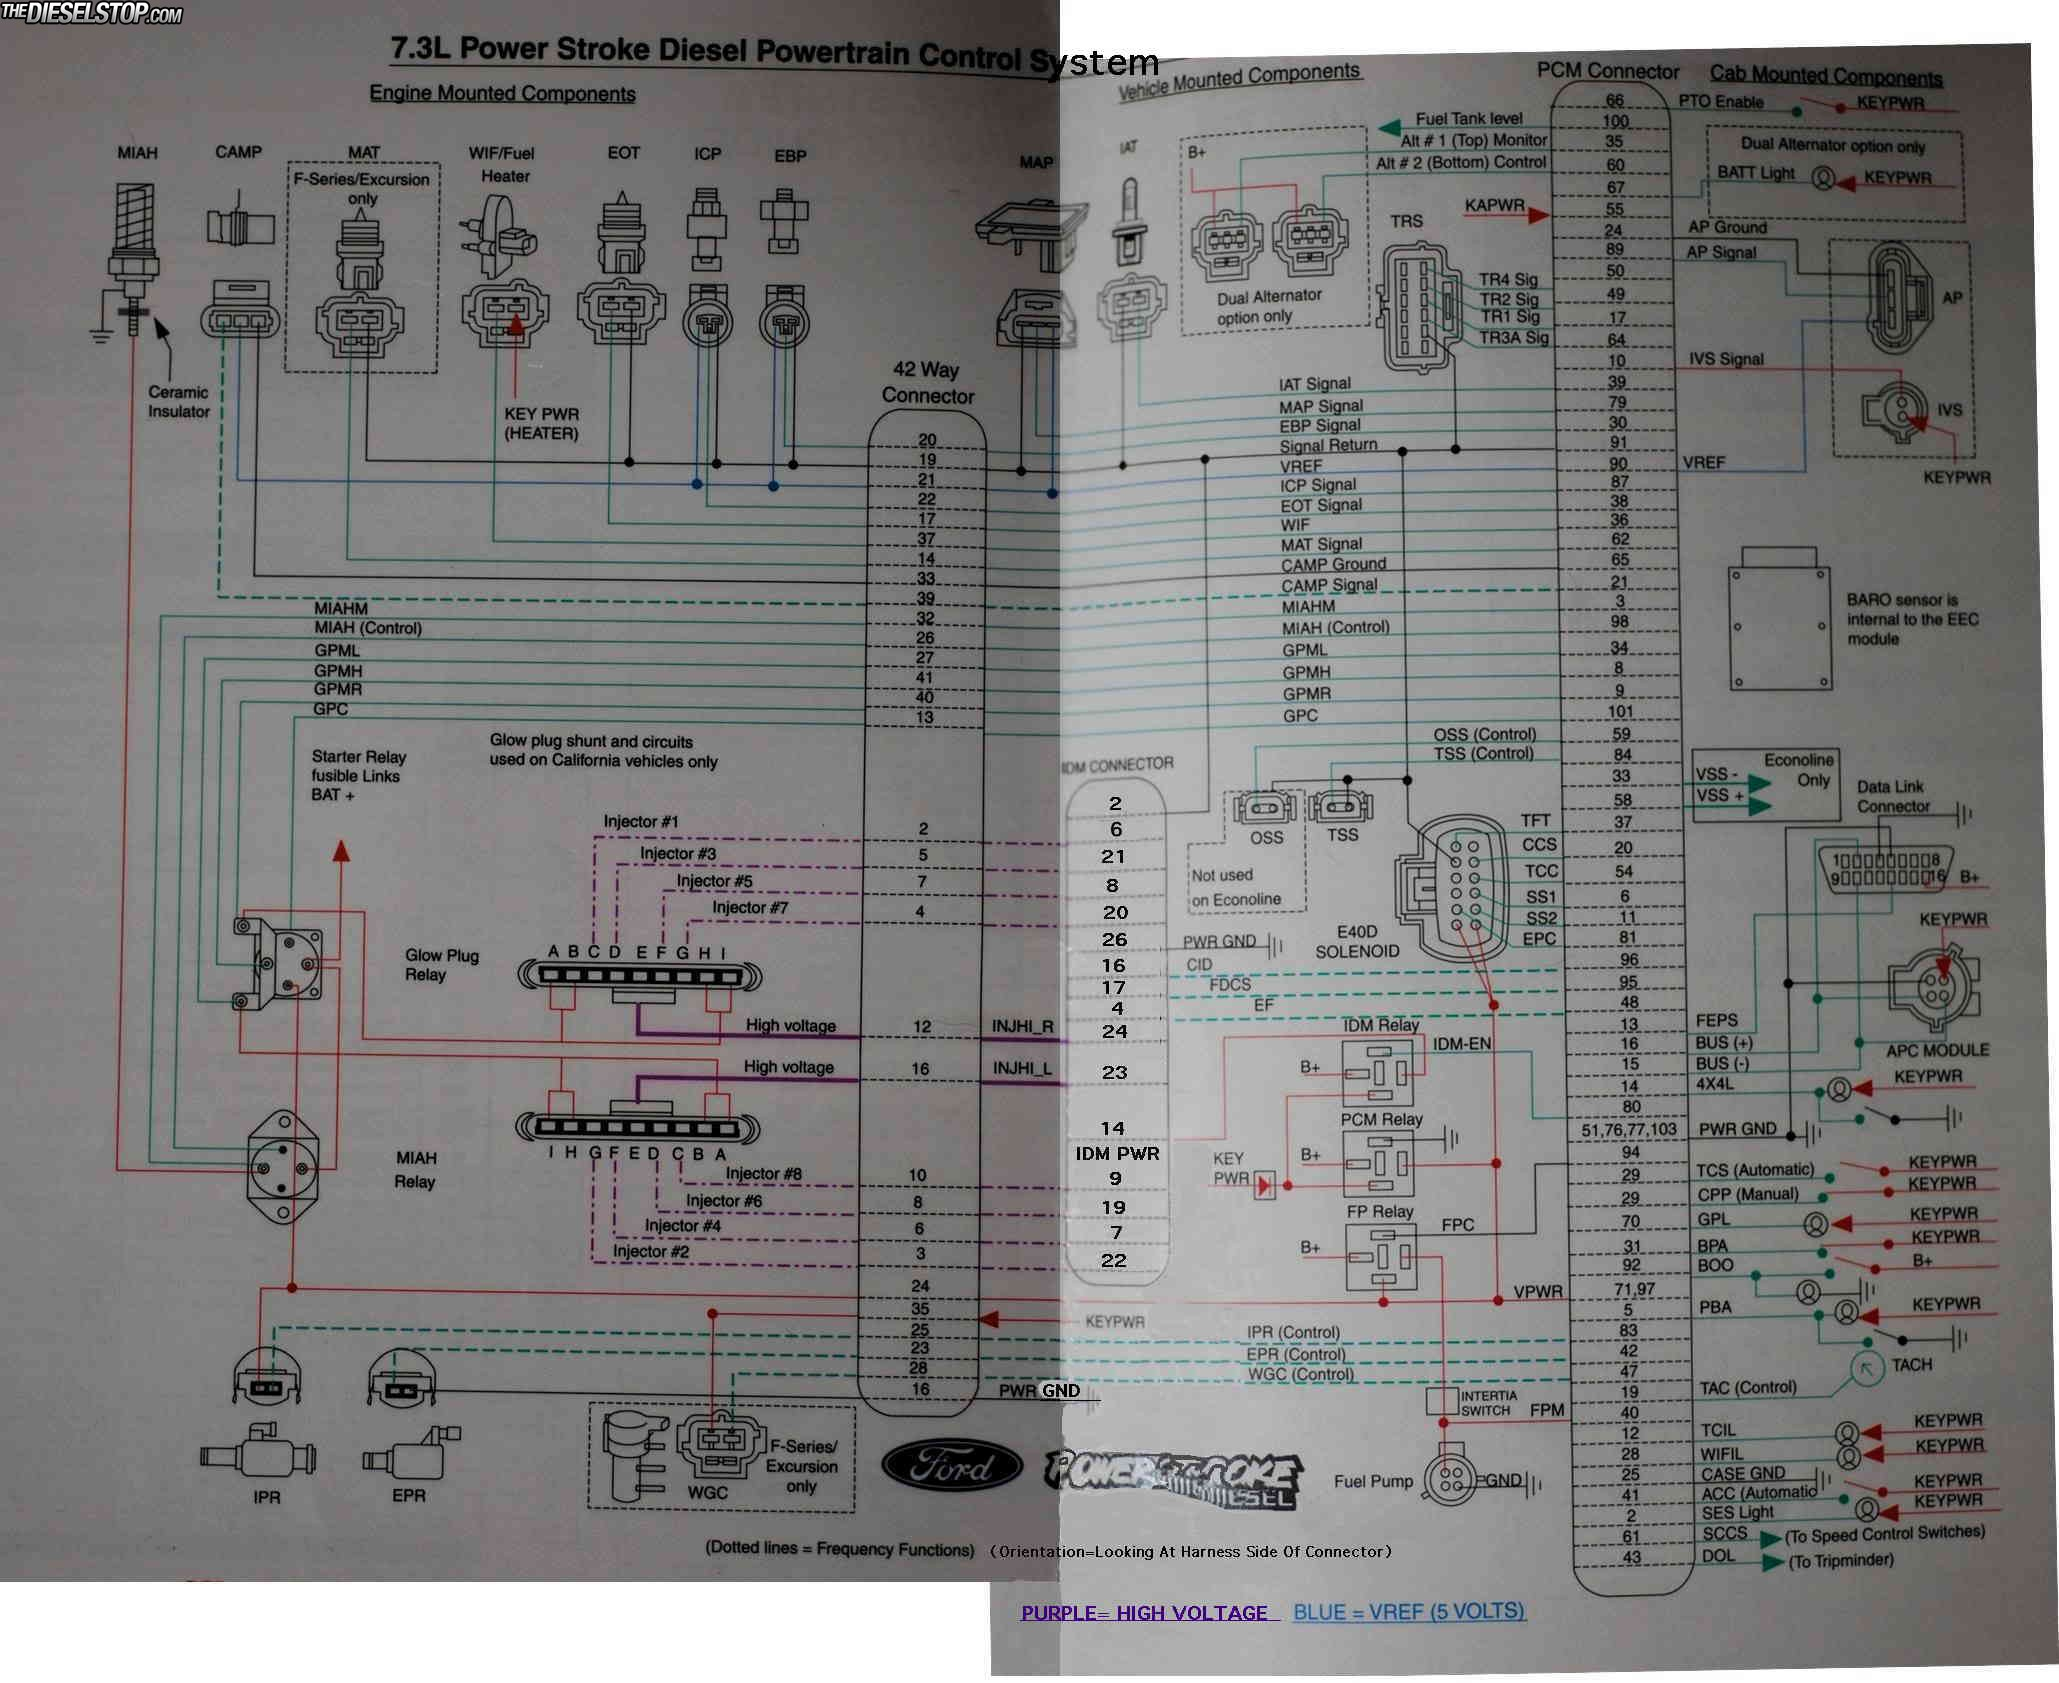 7.3L Wiring Schematic Printable, Very Handy. - Diesel Forum - 7.3 Powerstroke Wiring Diagram